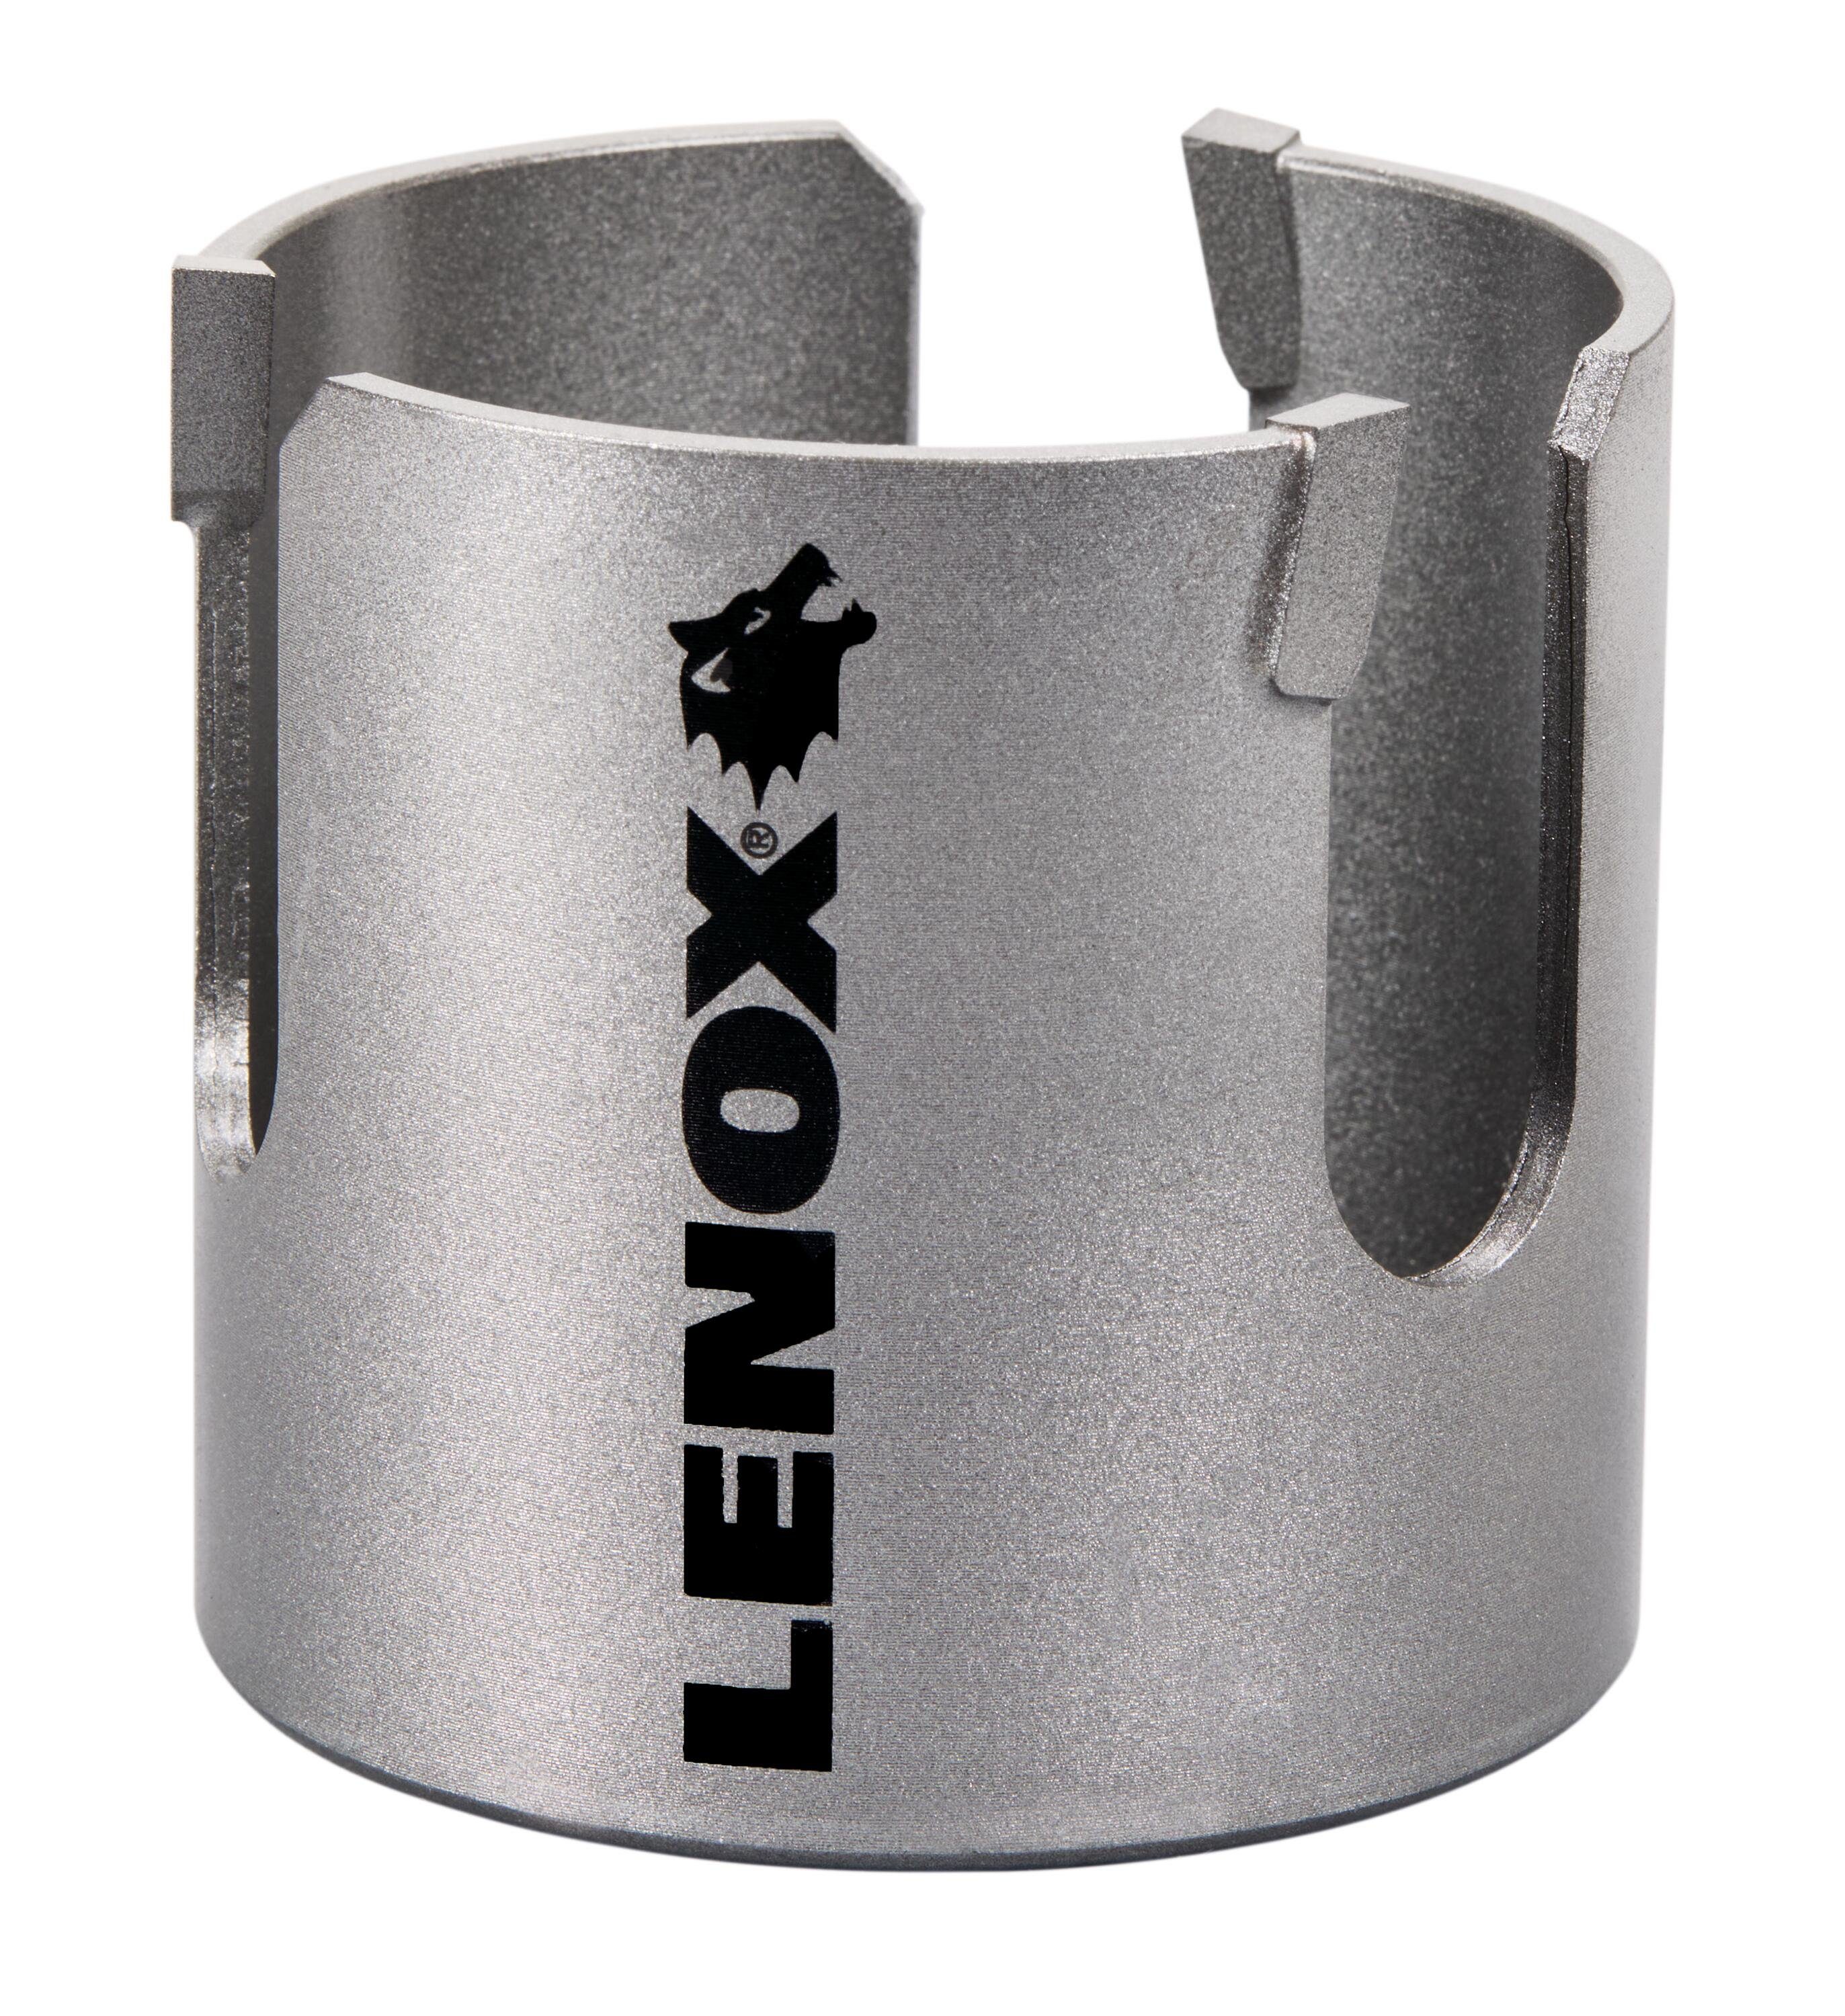 Lenox Lochsäge LXAH42341 Carbide Multi-Material 68 mm, Ø 68 mm